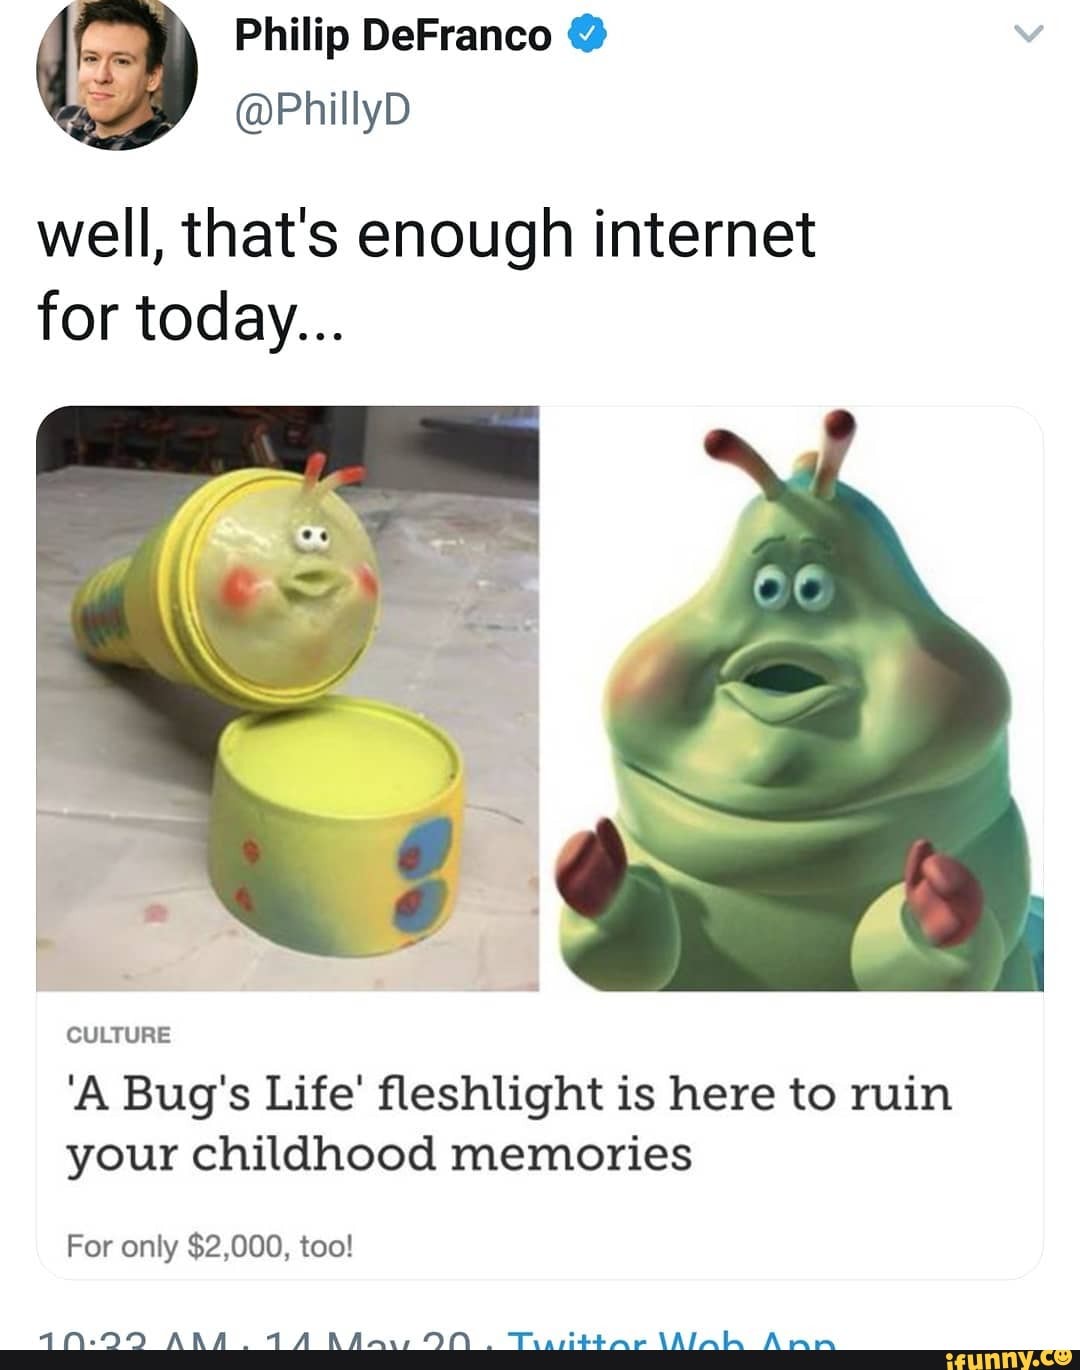 Bugs life flesh light